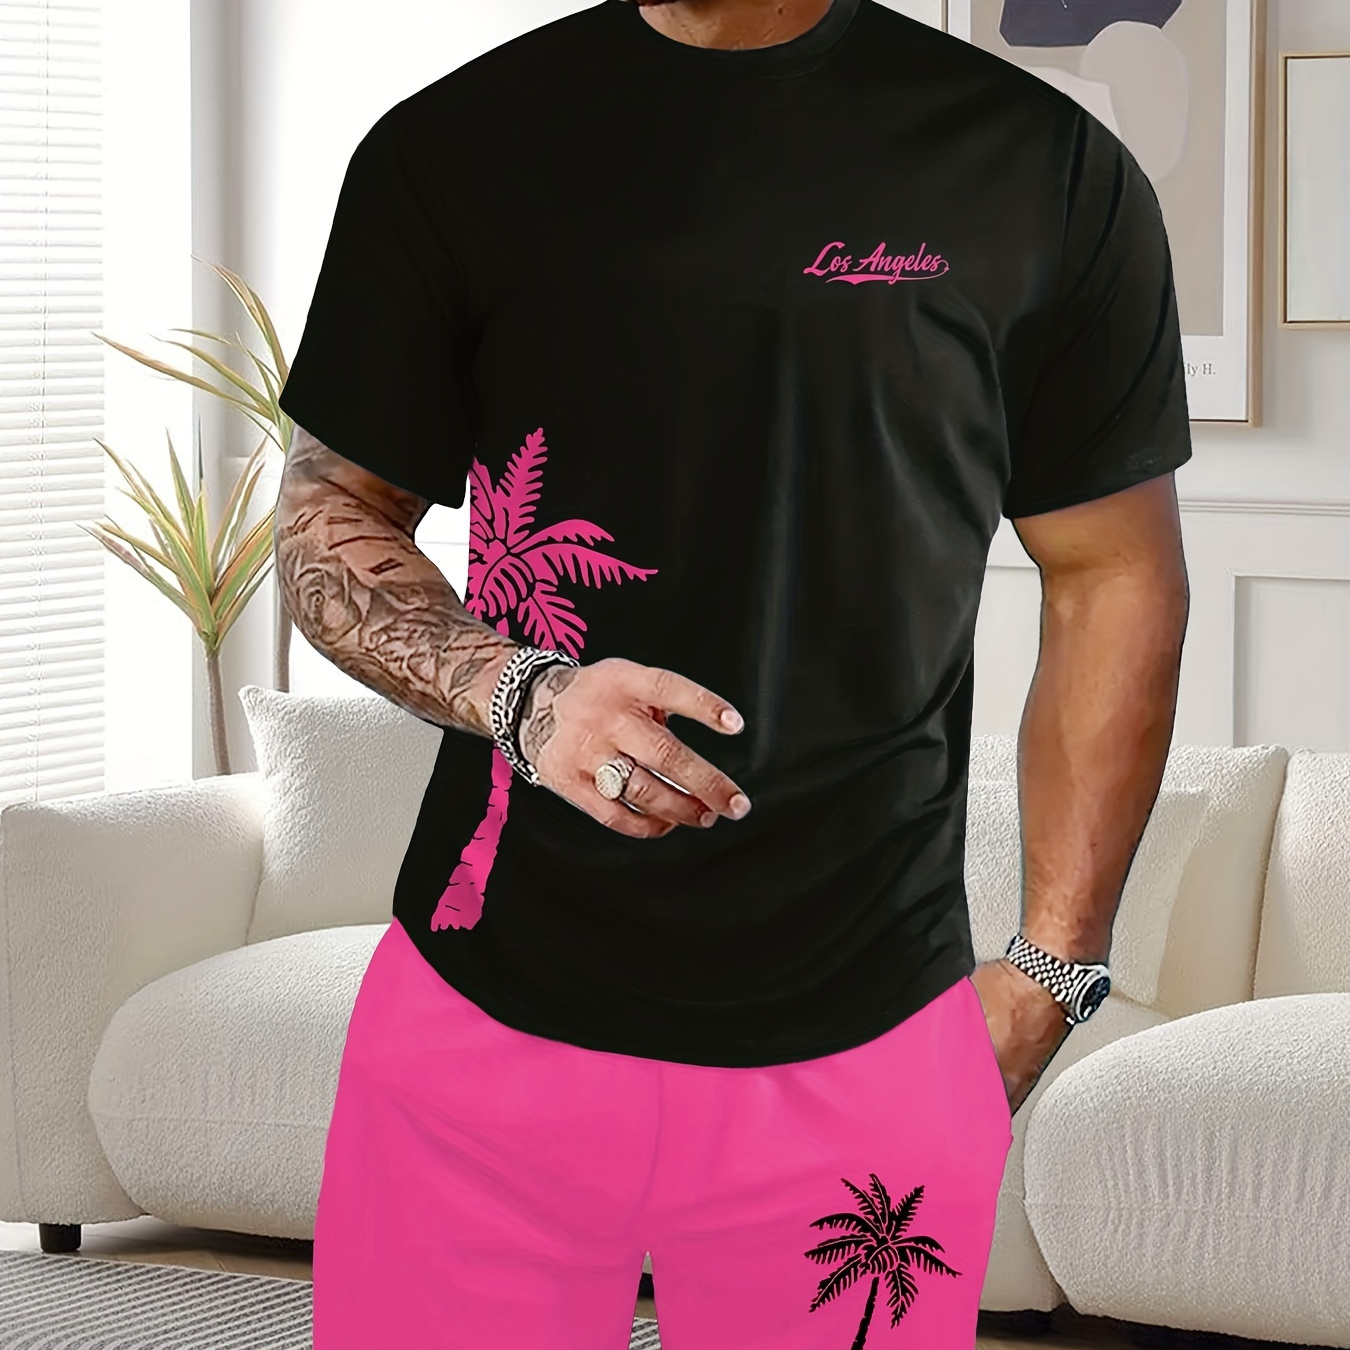 

2 Pcs Men's Coconut Tree Print Casual Round Neck Short Sleeve T-shirts & Elastic Waist Shorts Pajama Sets, Comfortable & Skin-friendly Style Pajamas For Men's Cozy Loungewear